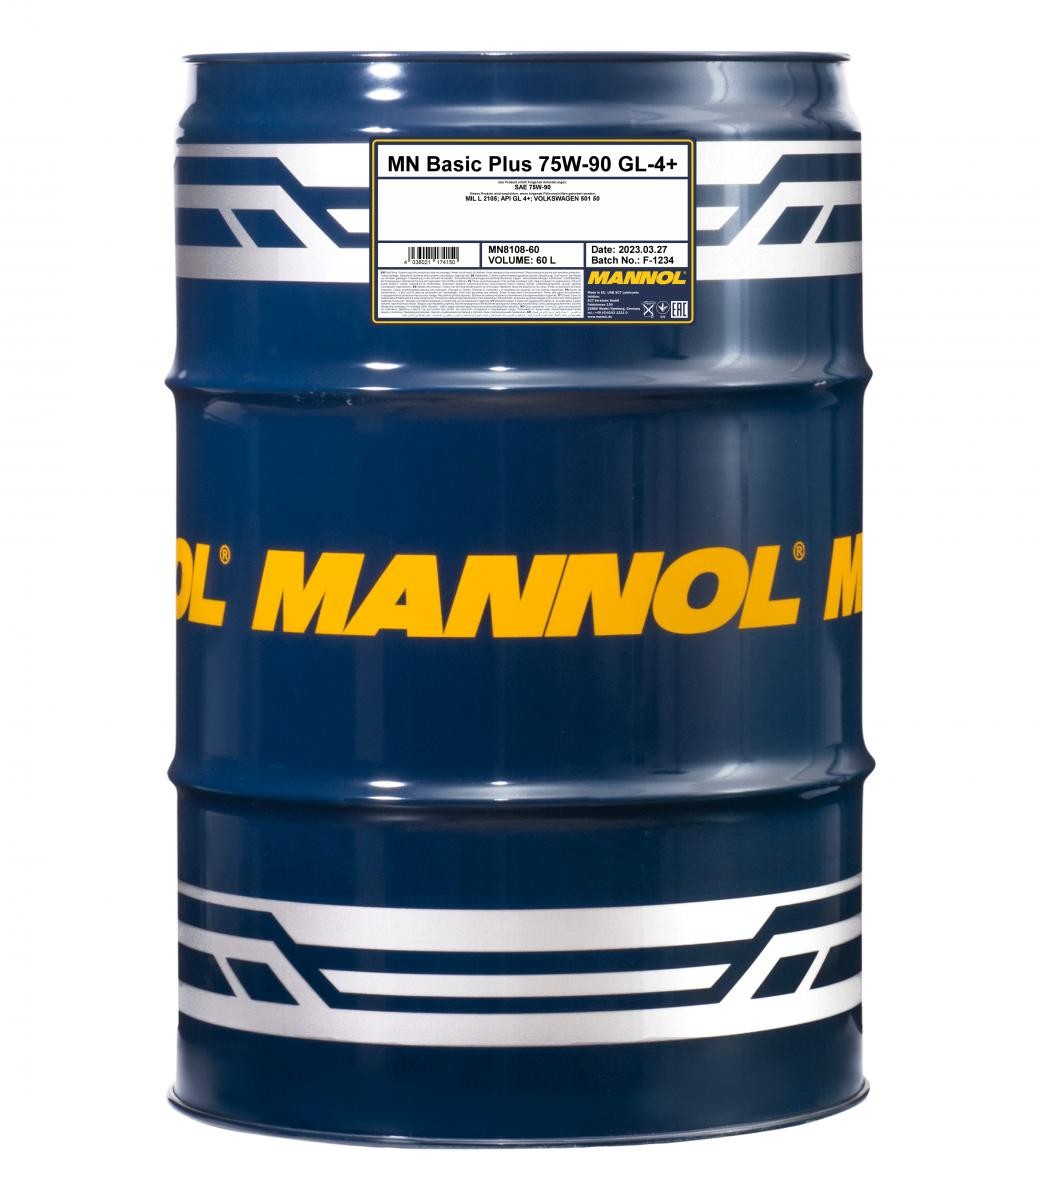 MANNOL Basic Plus GL-4+ MN8108-60 Transmission fluid 75W-90, Full Synthetic Oil, Capacity: 60l